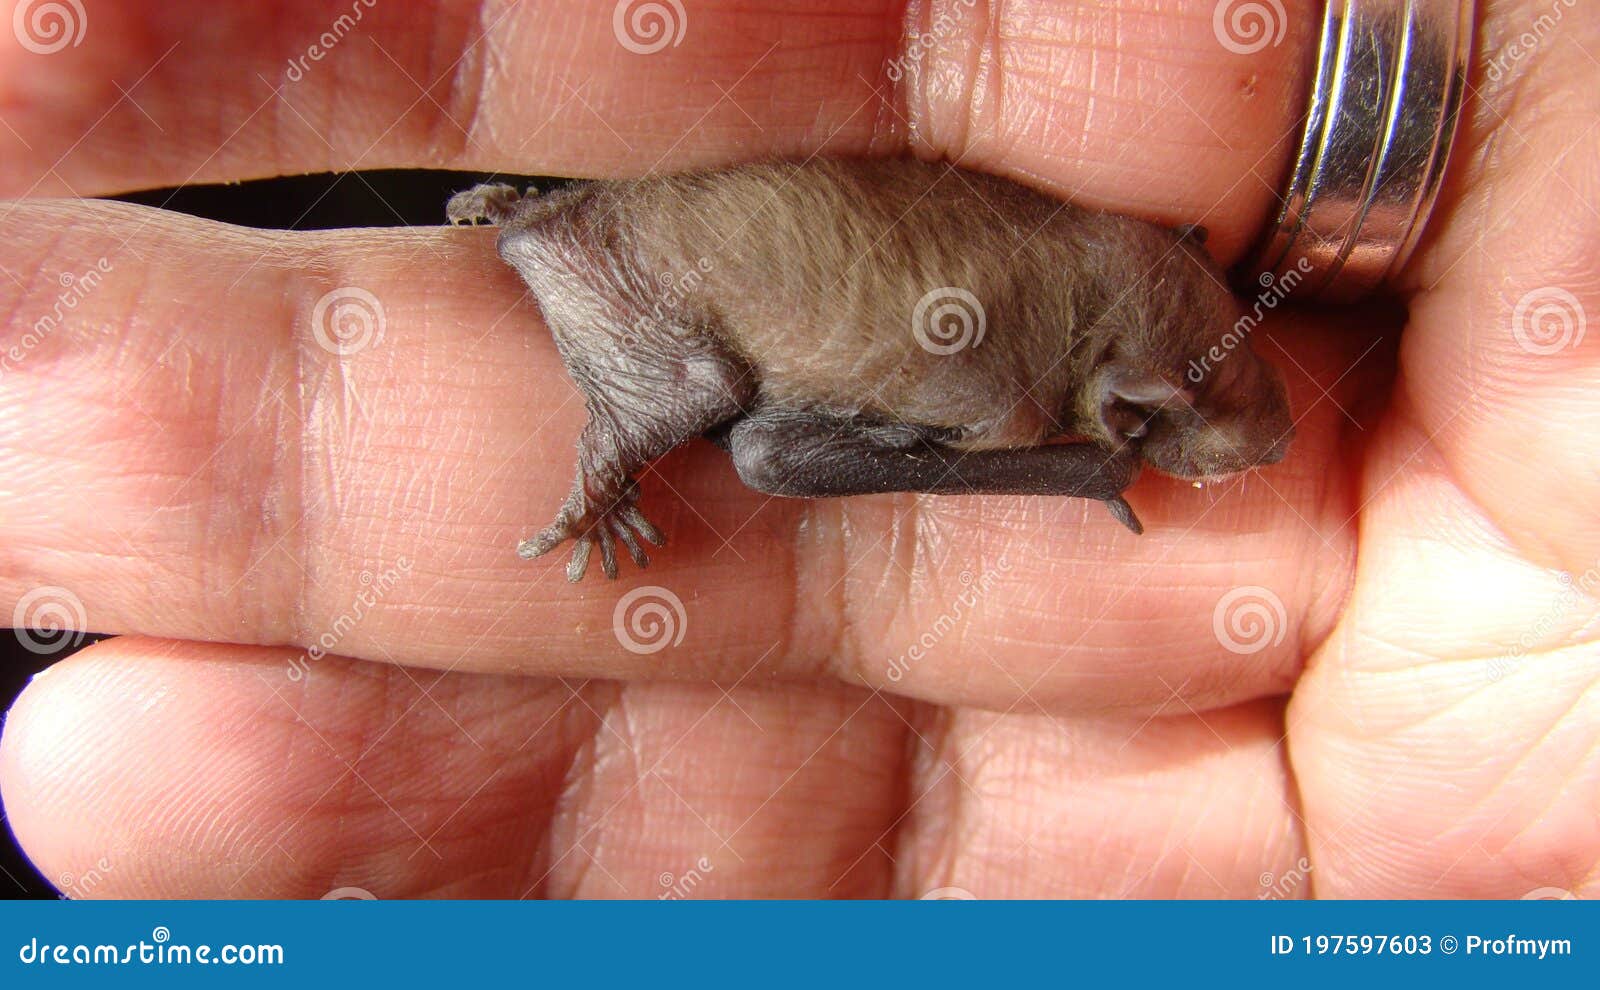 Bat Baby Bat on Hand Veterinarian Examining a Bat Birth of New Life, Cute  Baby Animal, Life ,cute Animal, Beautiful Animal. Wildli Stock Image -  Image of intelligent, heart: 197597603